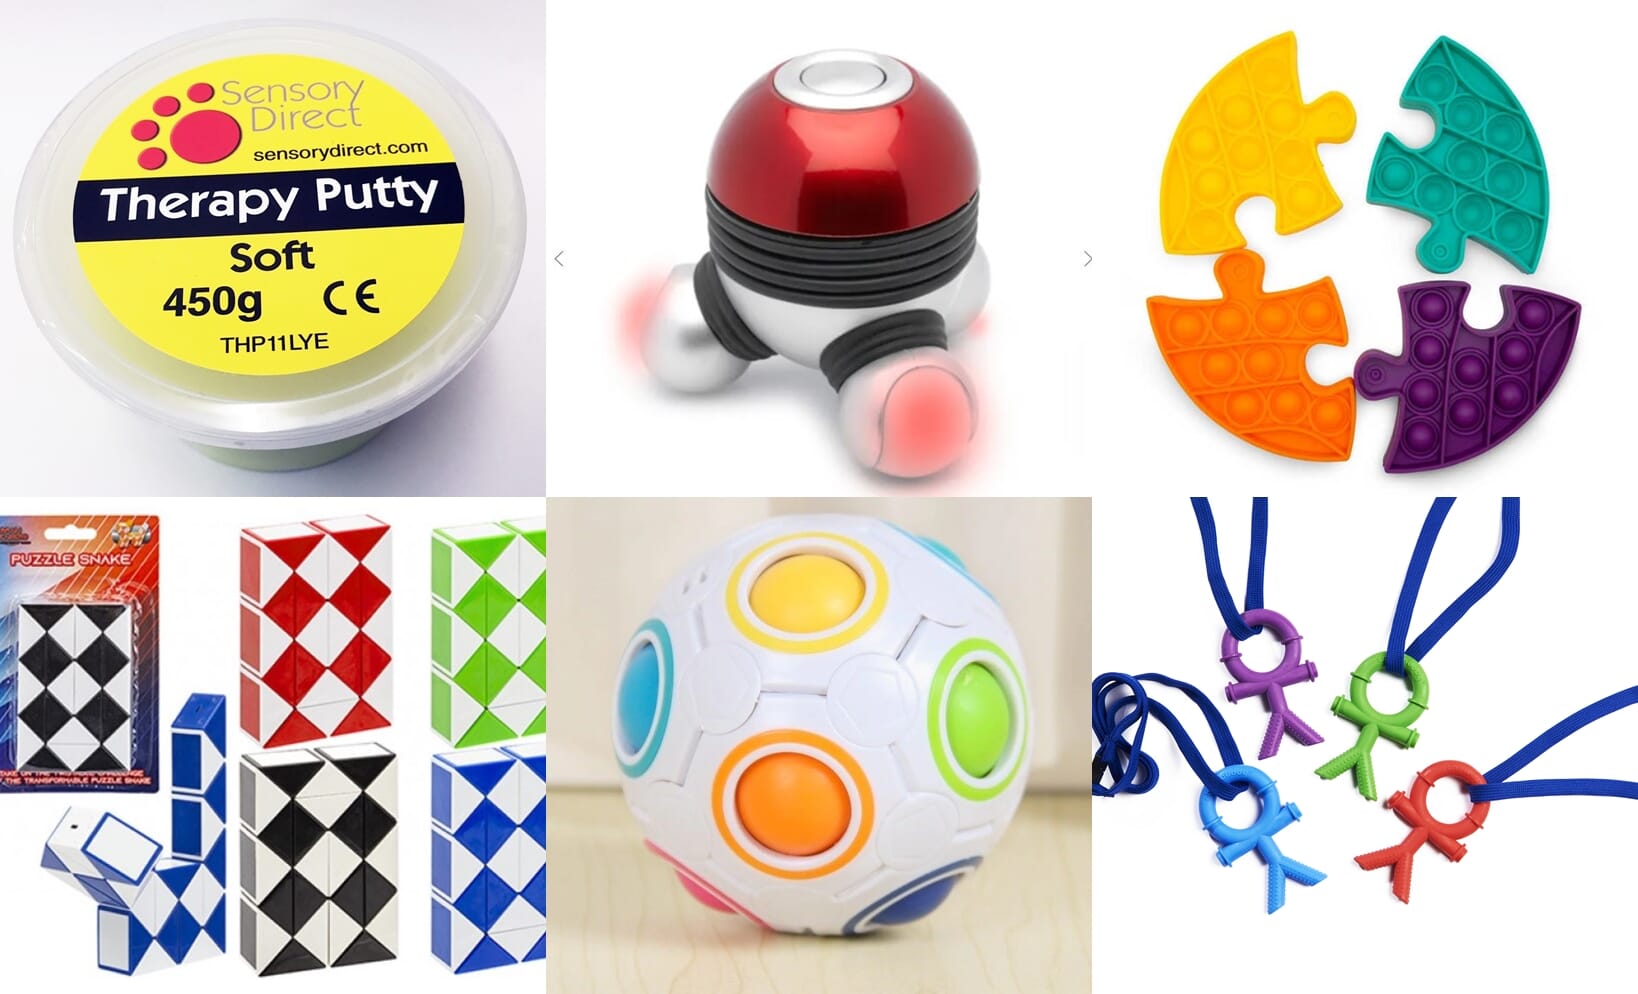 Details about   Fun Sensory Toys Fidget Stress Sensory Autism ADHD Special Needs SENS Gift 